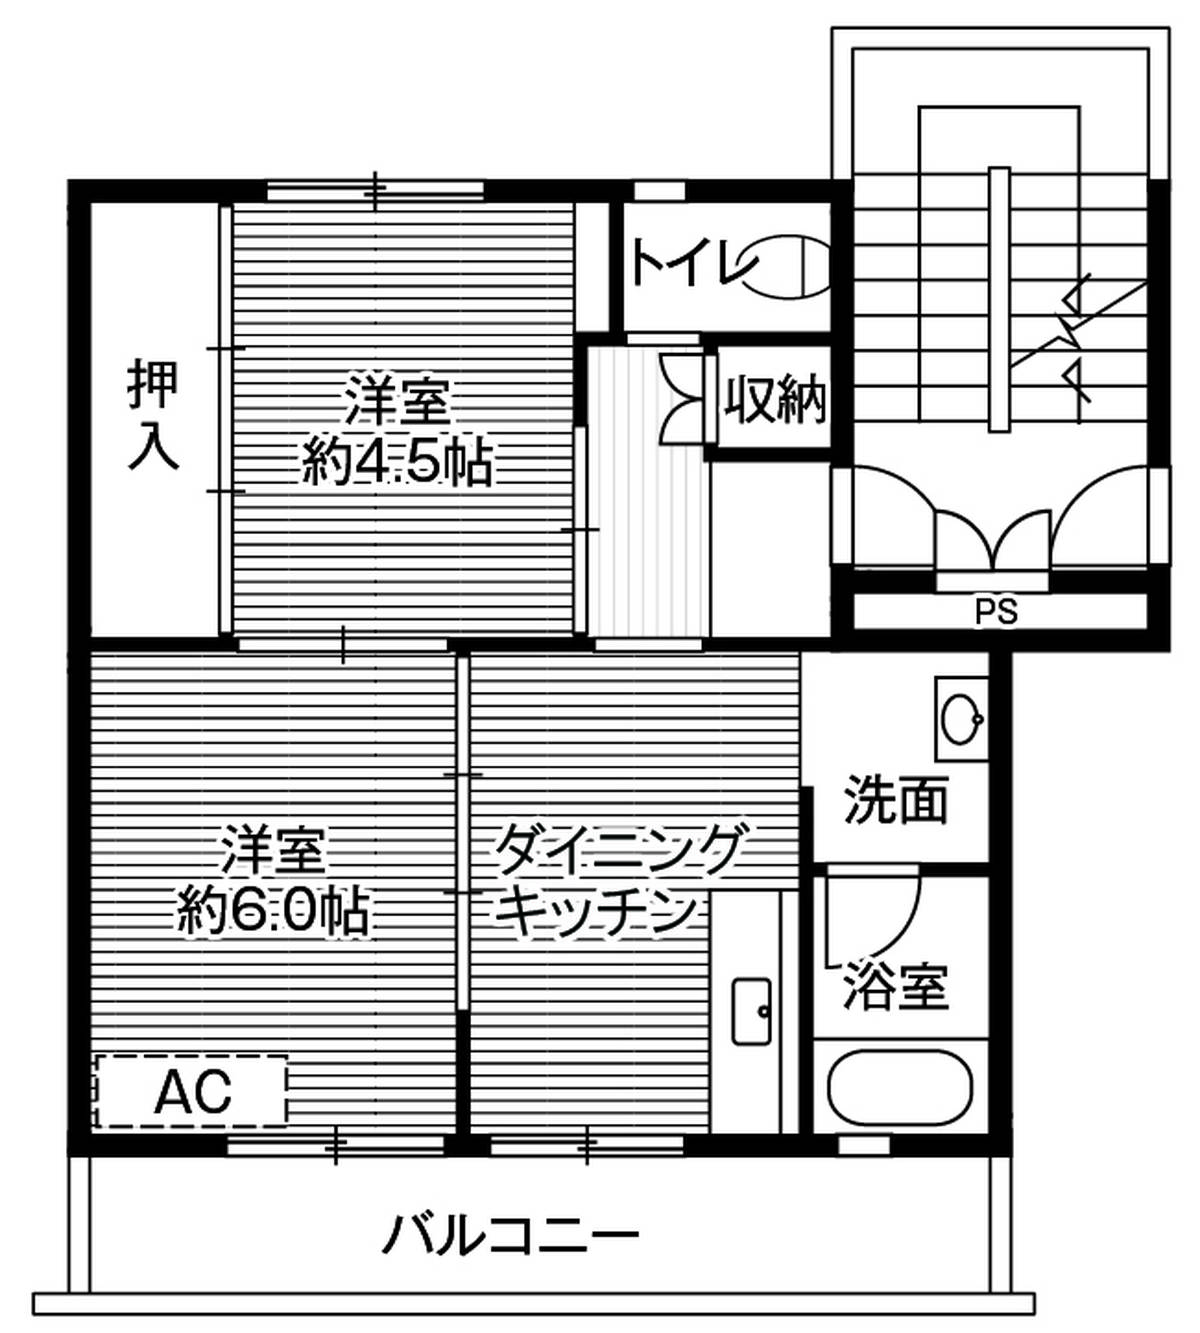 2DK floorplan of Village House Ashikaga Hajika in Ashikaga-shi